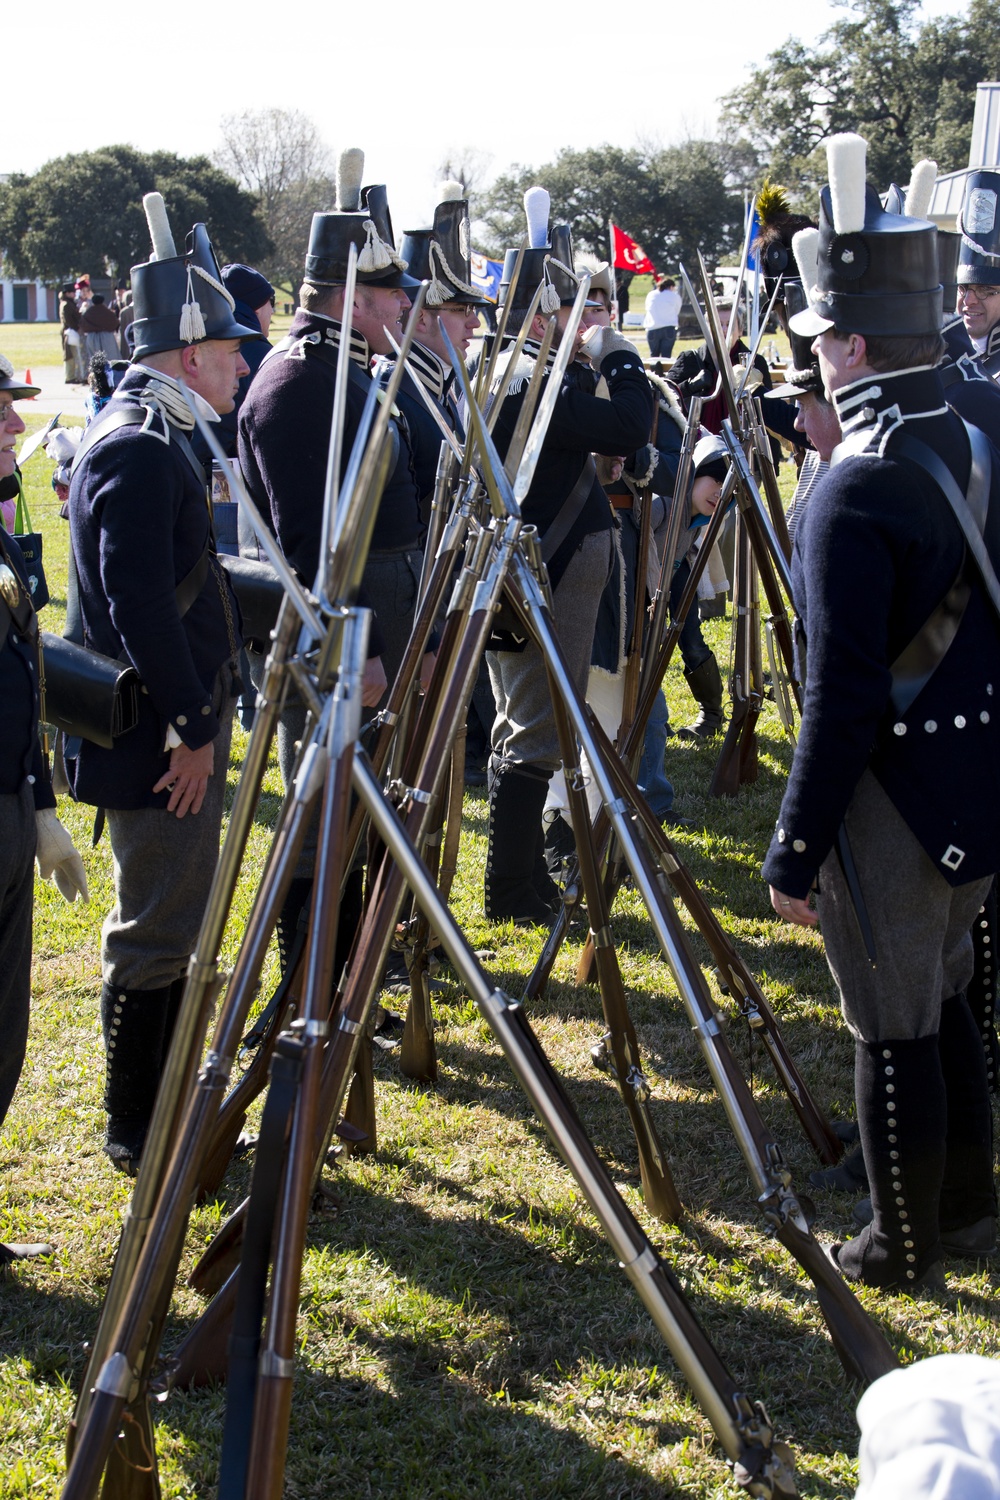 Celebrating Unity, Battle of New Orleans Bicentennial Chalmette Battlefield